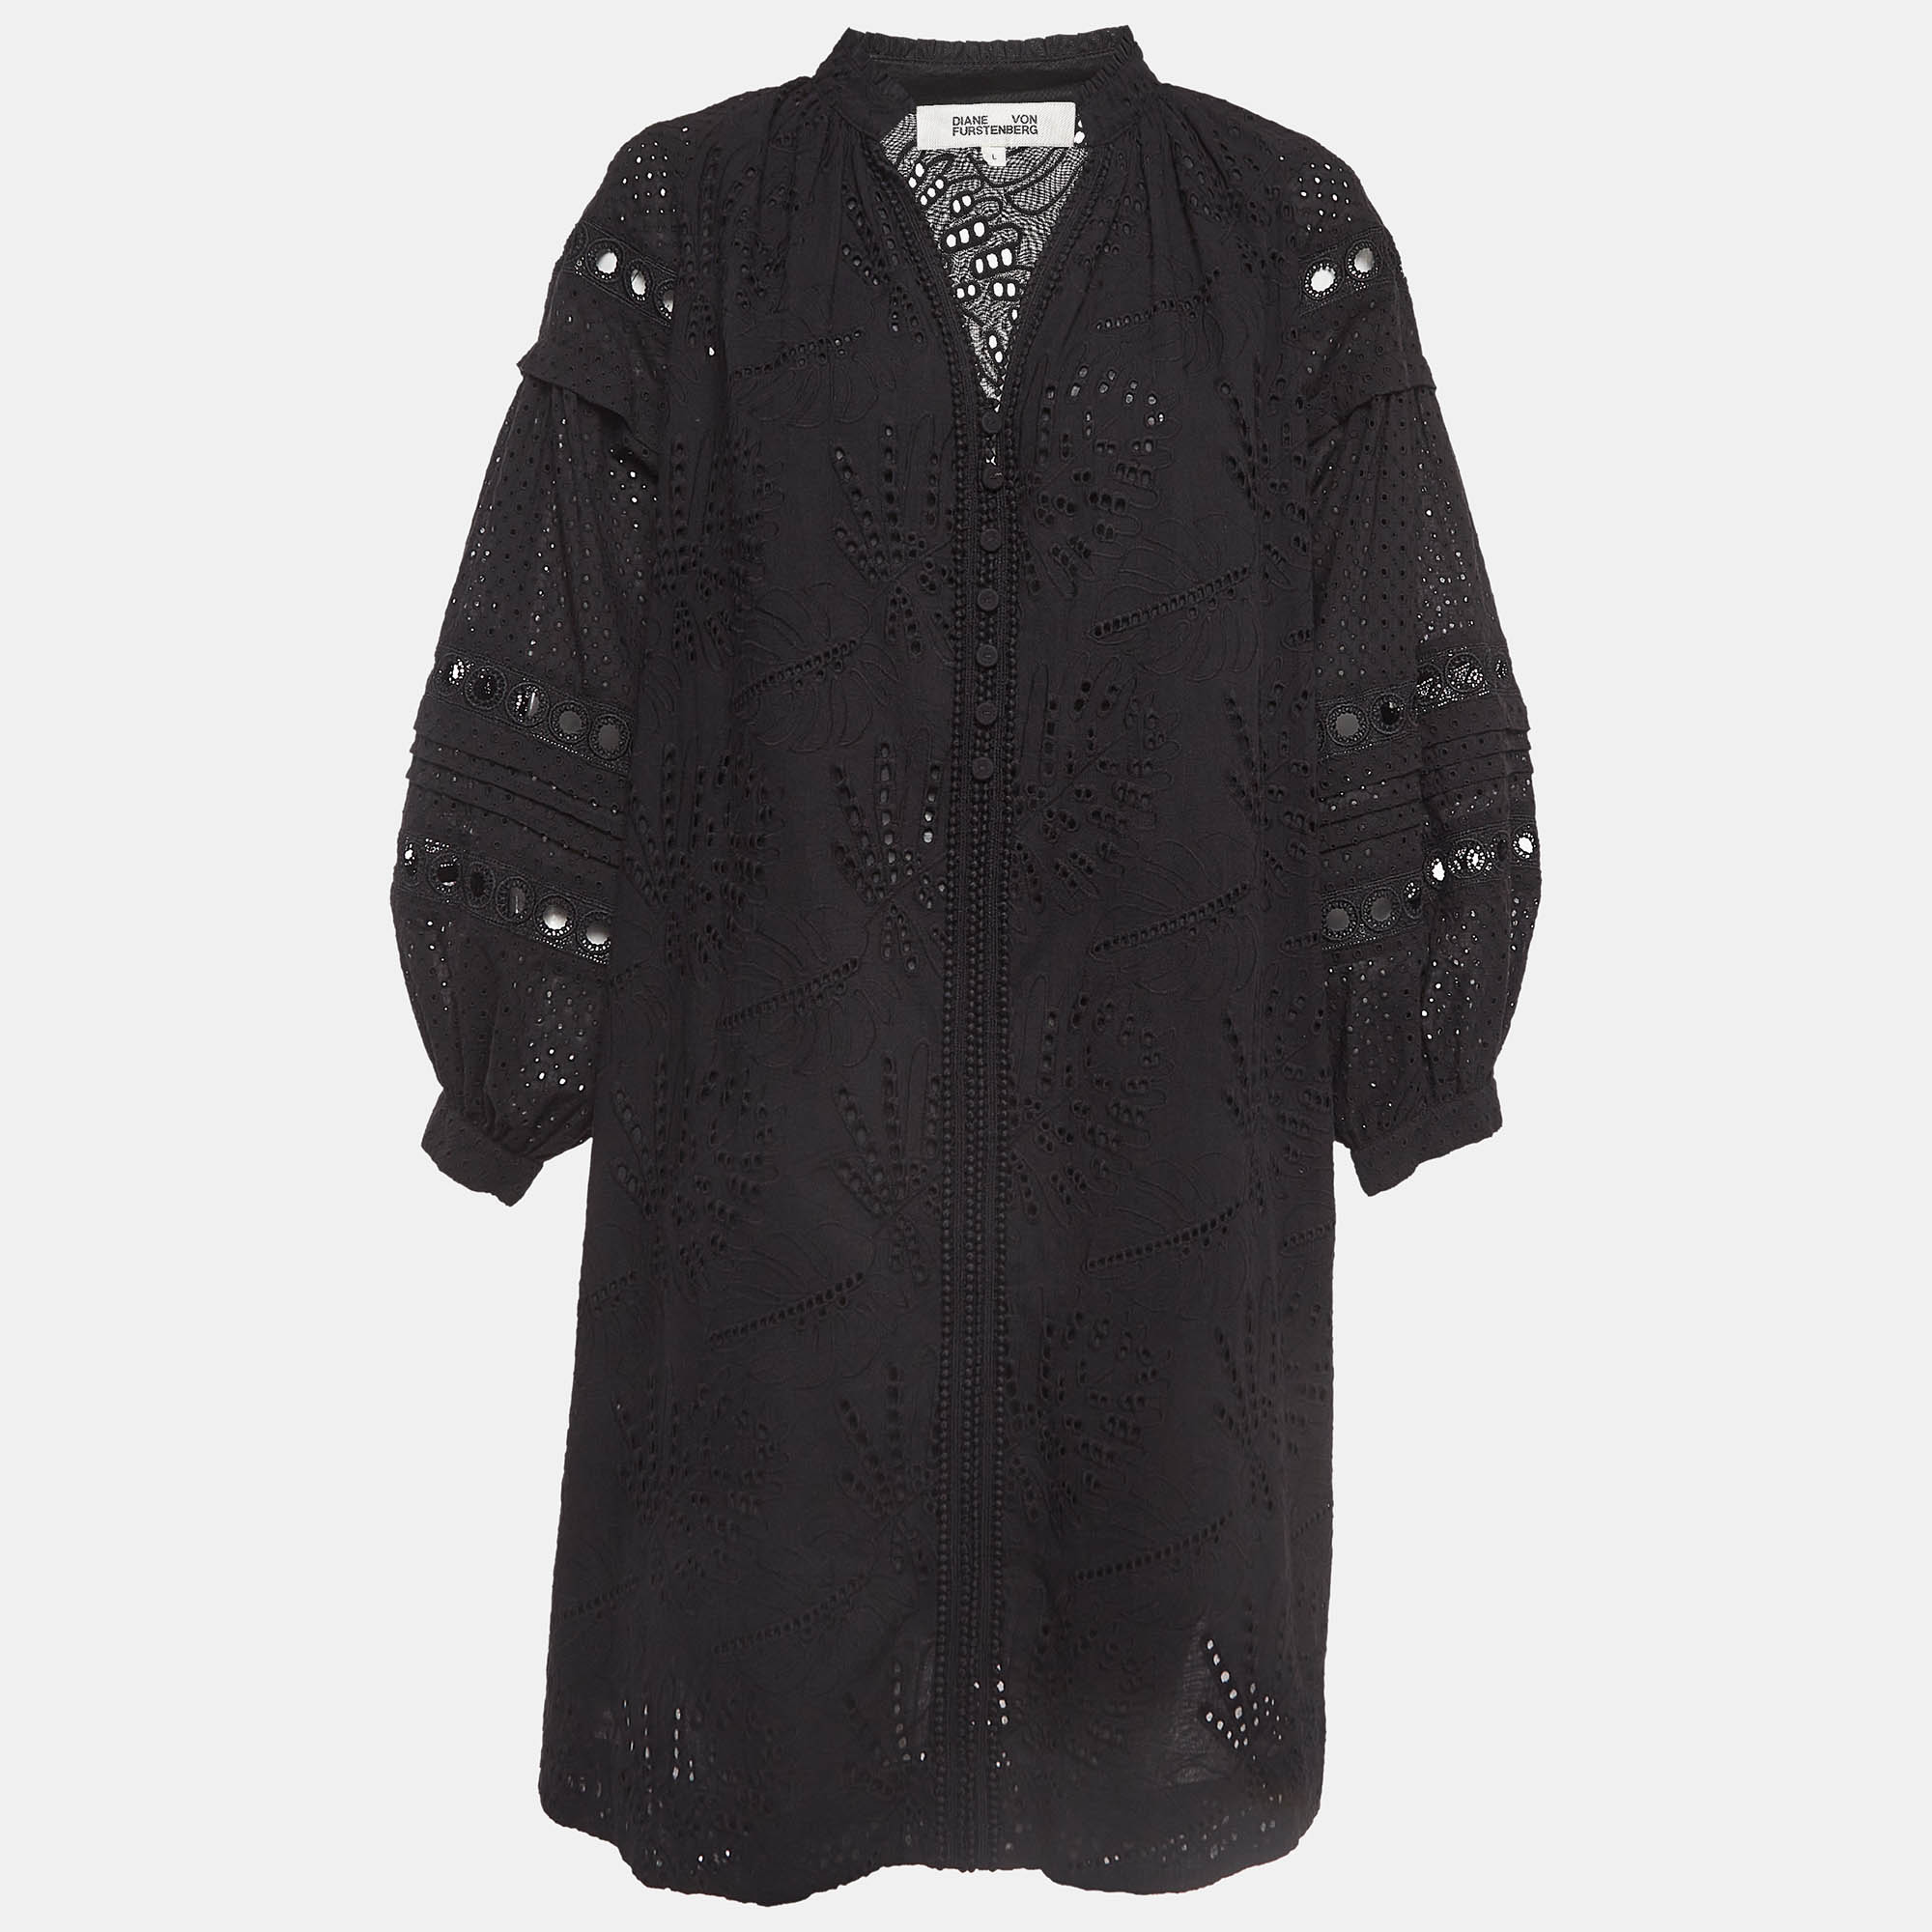 Diane von furstenberg black nicolette broderie anglaise cotton mini dress l